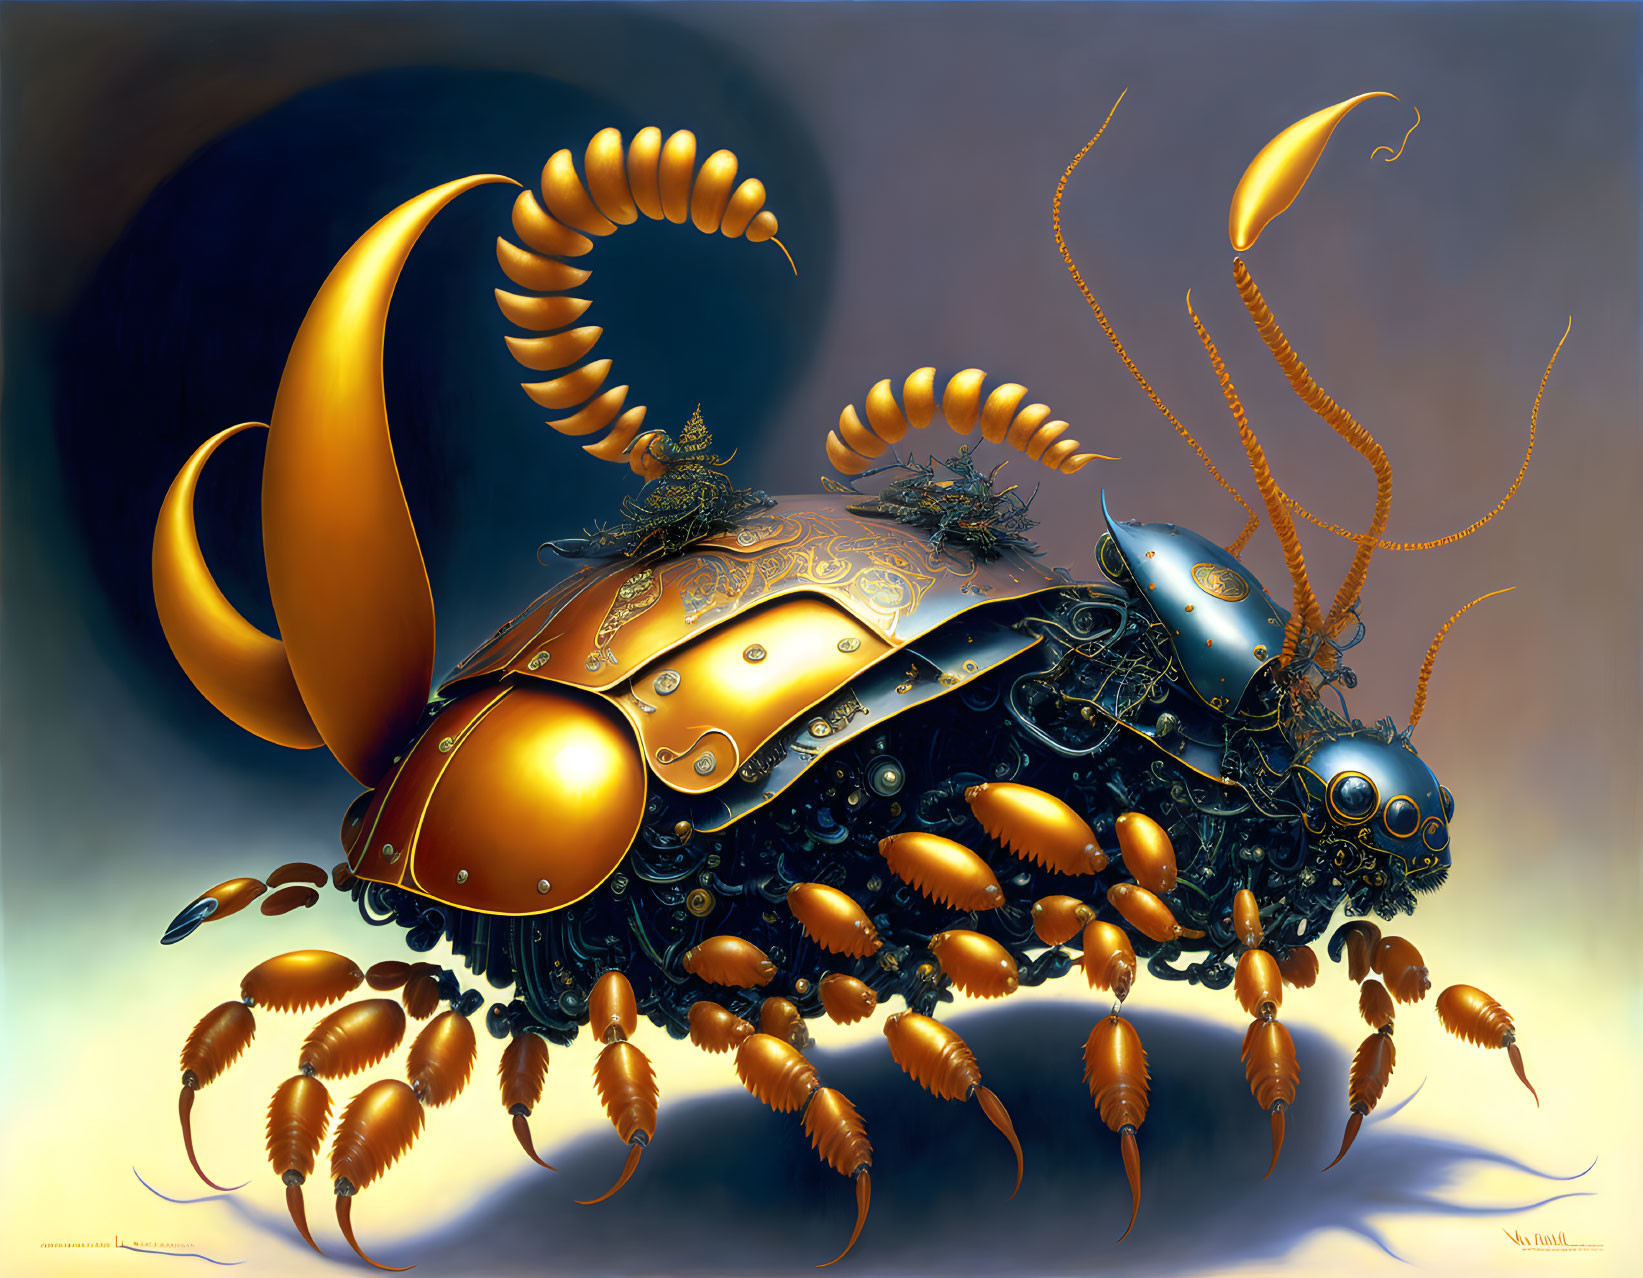 Surreal Mechanical Scorpion